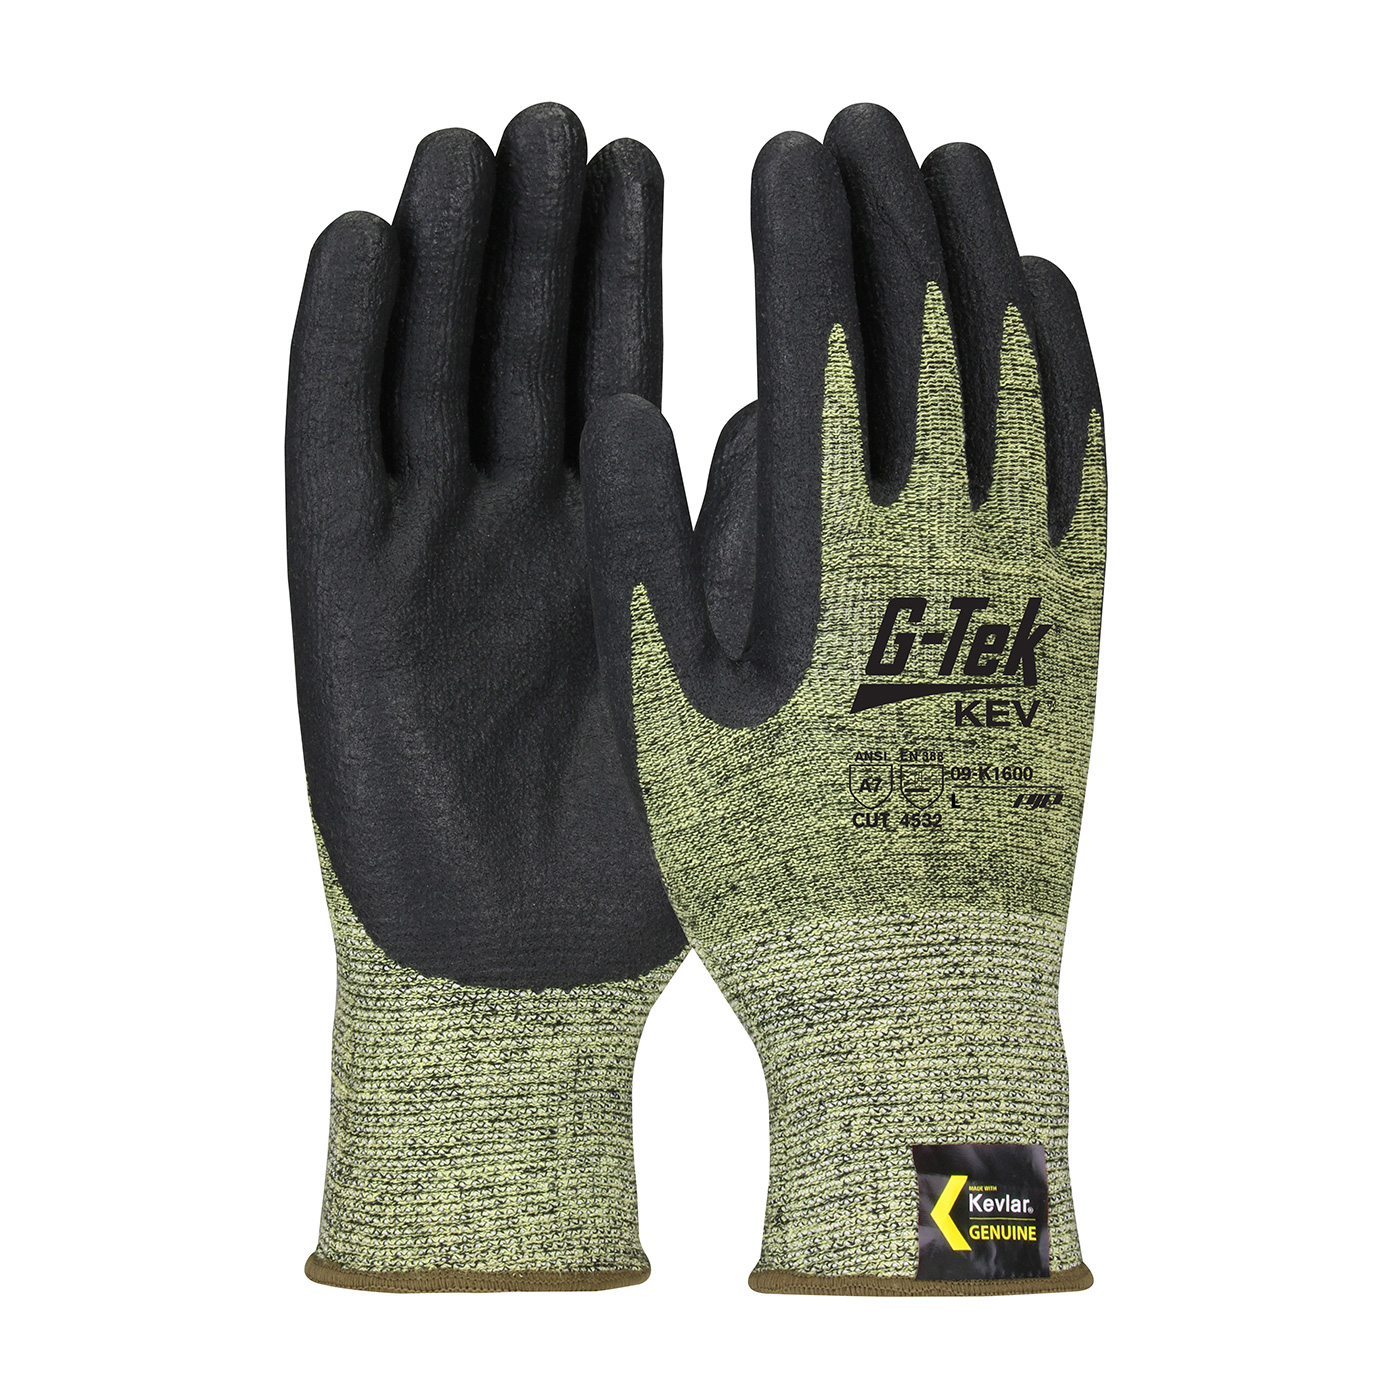 09-K1600 PIP®G-Tek®Kev™13-Gauge凯夫拉尔®腈Coated Seamless Knit Gloves